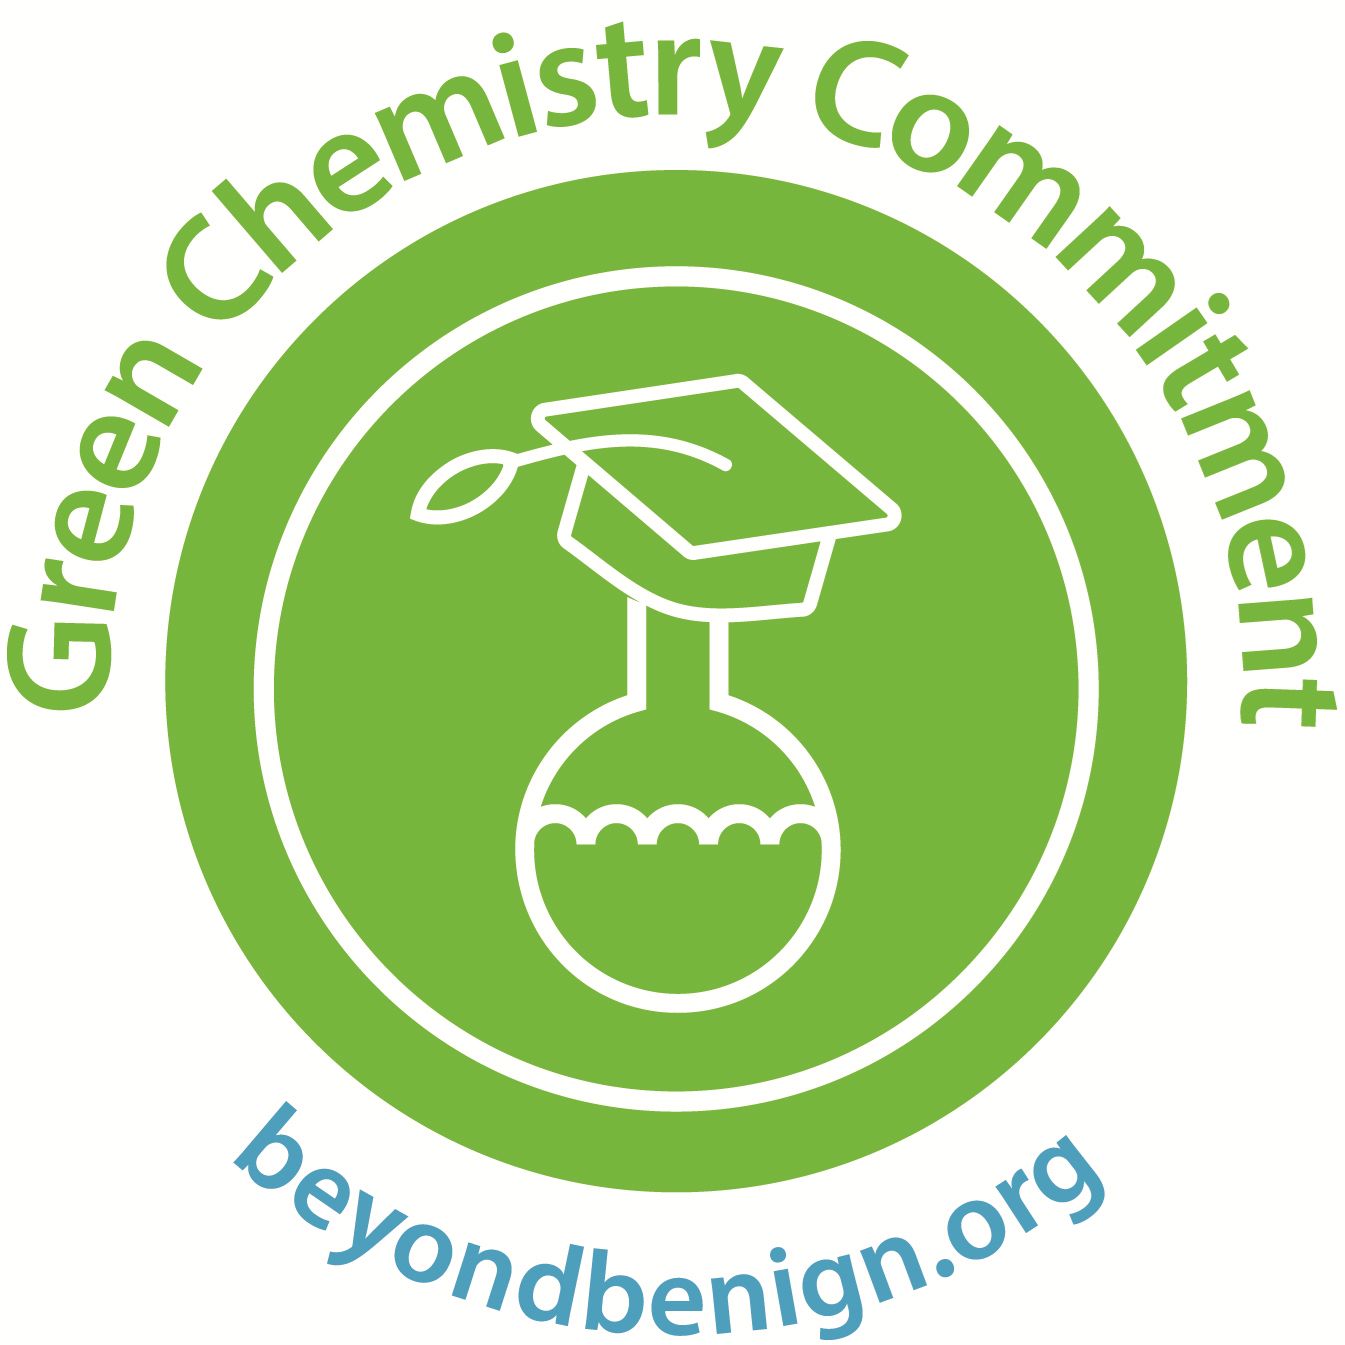 Green Chemistry Commitment Beyond Benigin Logo.